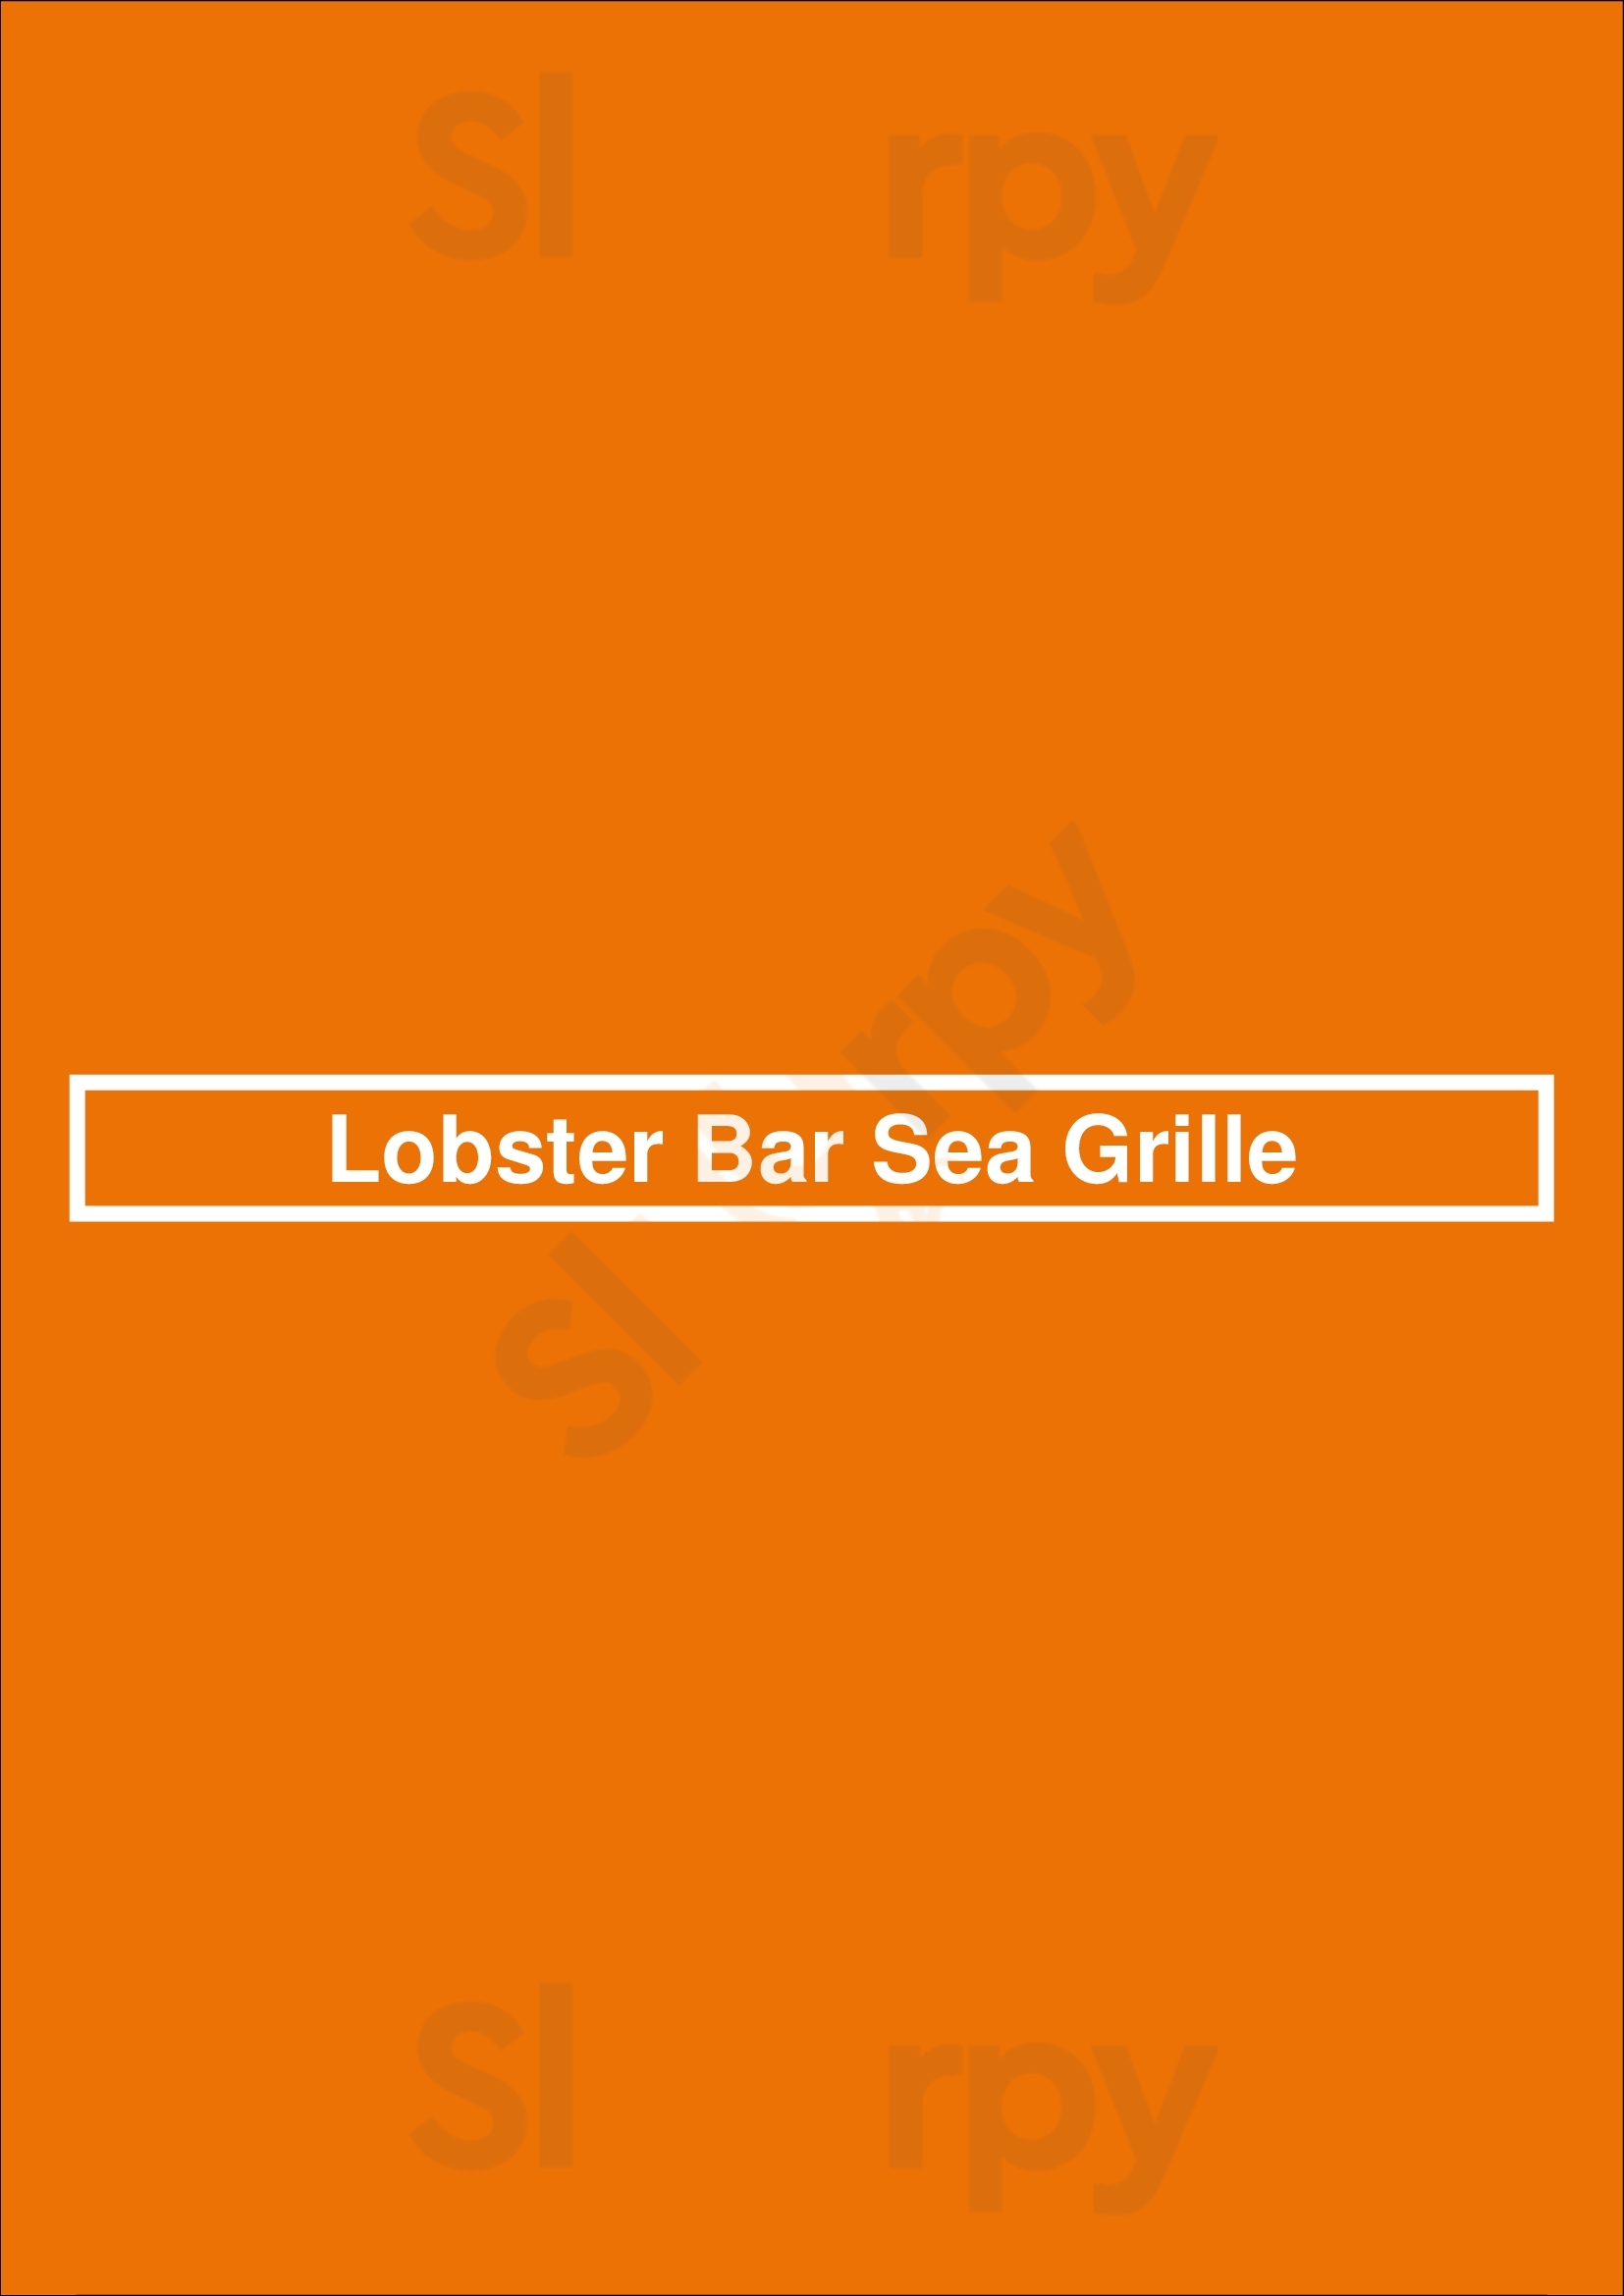 Lobster Bar Sea Grille Fort Lauderdale Menu - 1